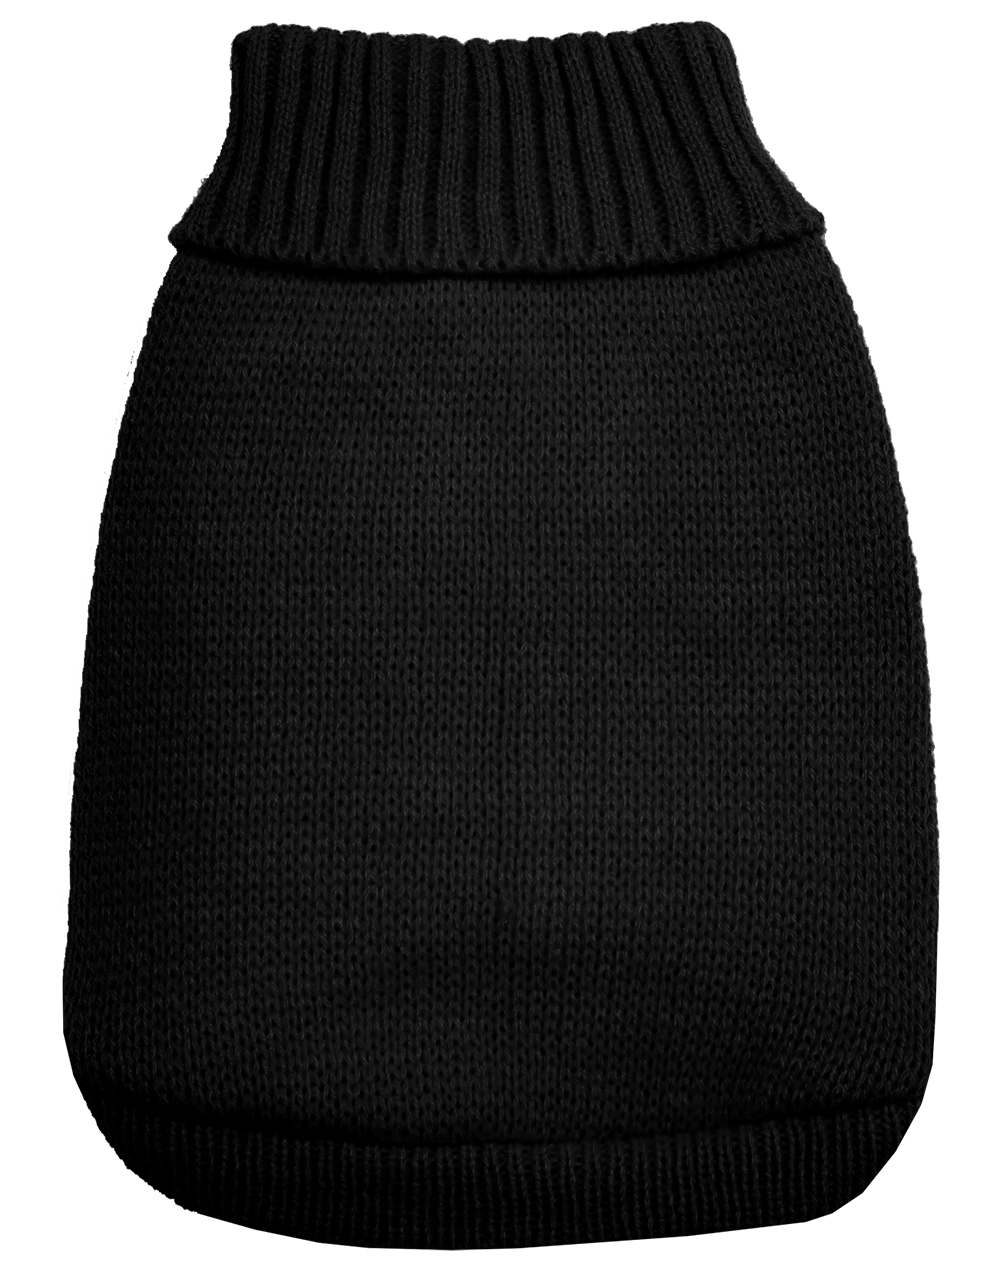 Knit Pet Sweater Black Size XXL